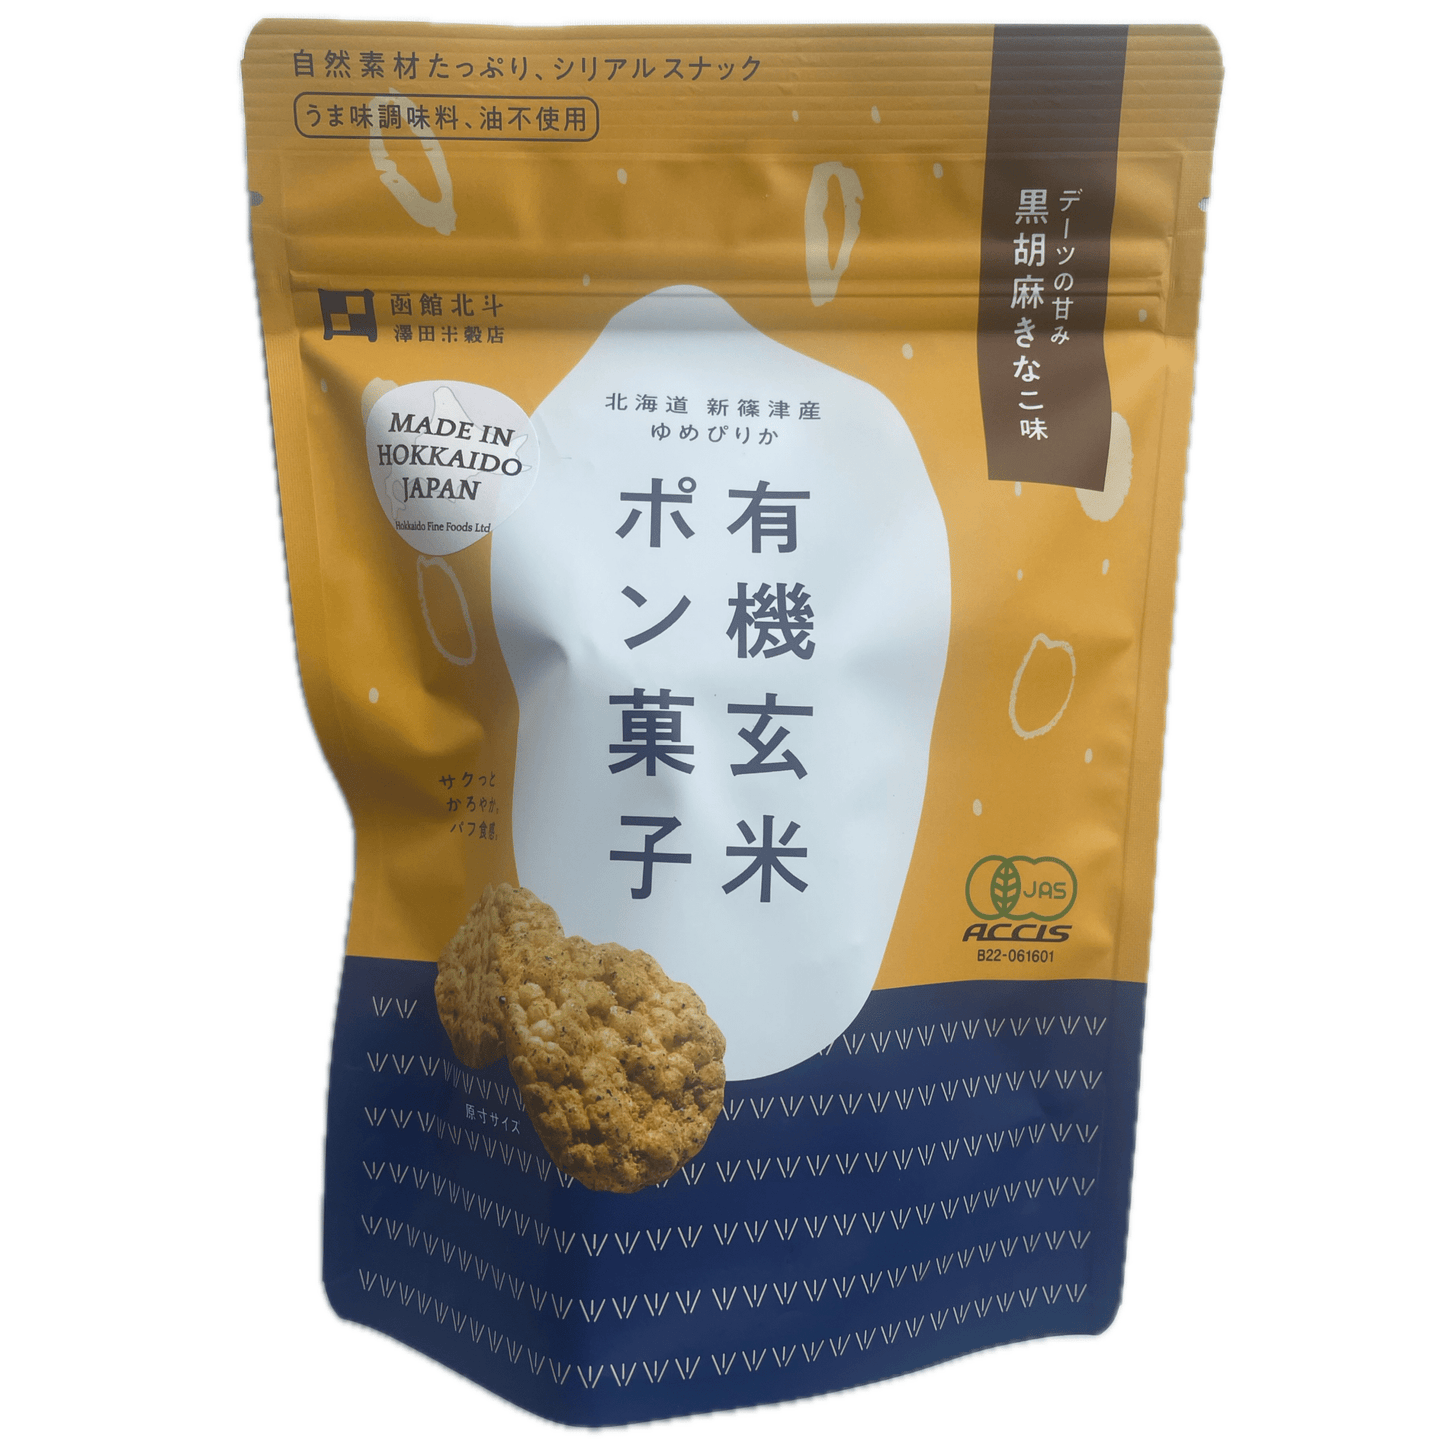 Sawada Brown Rice Cakes Black Sesame & Kinako Flavour 30g / 澤田米穀店 有機玄米ポン菓子 黒胡麻きなこ味 30g - RiceWineShop